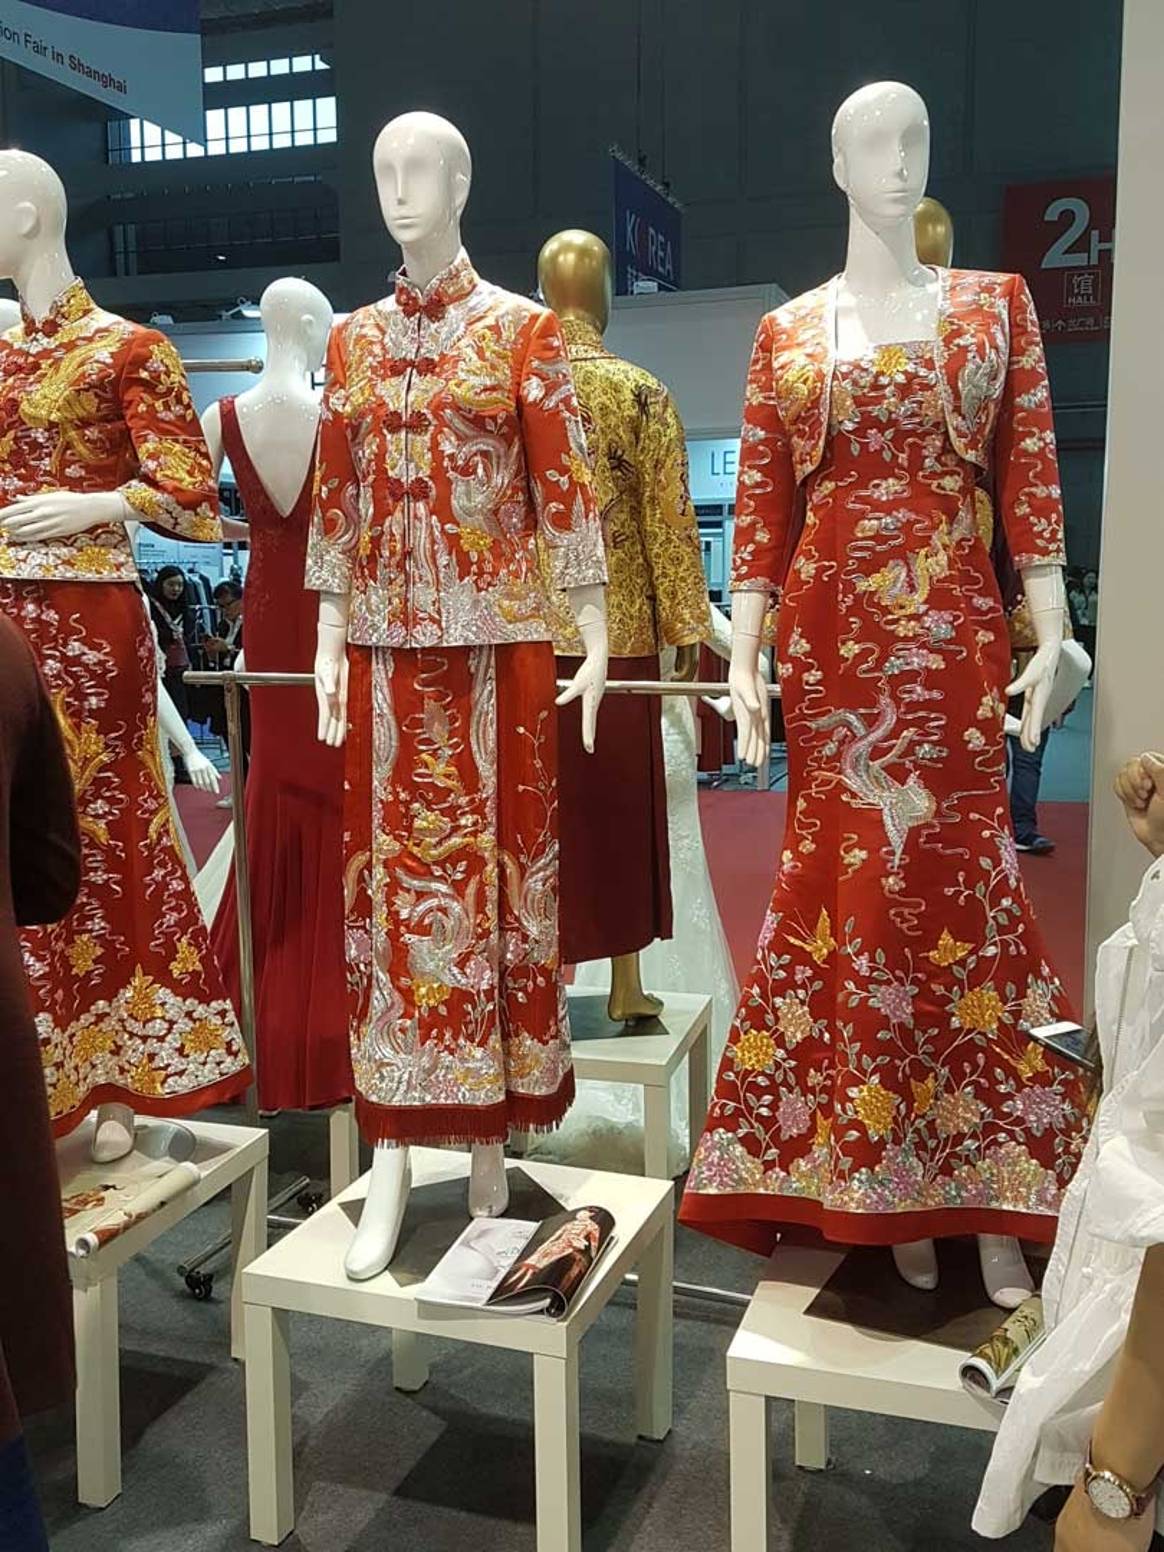 Chic Shanghai punta sull'incontro tra showroom e marchi